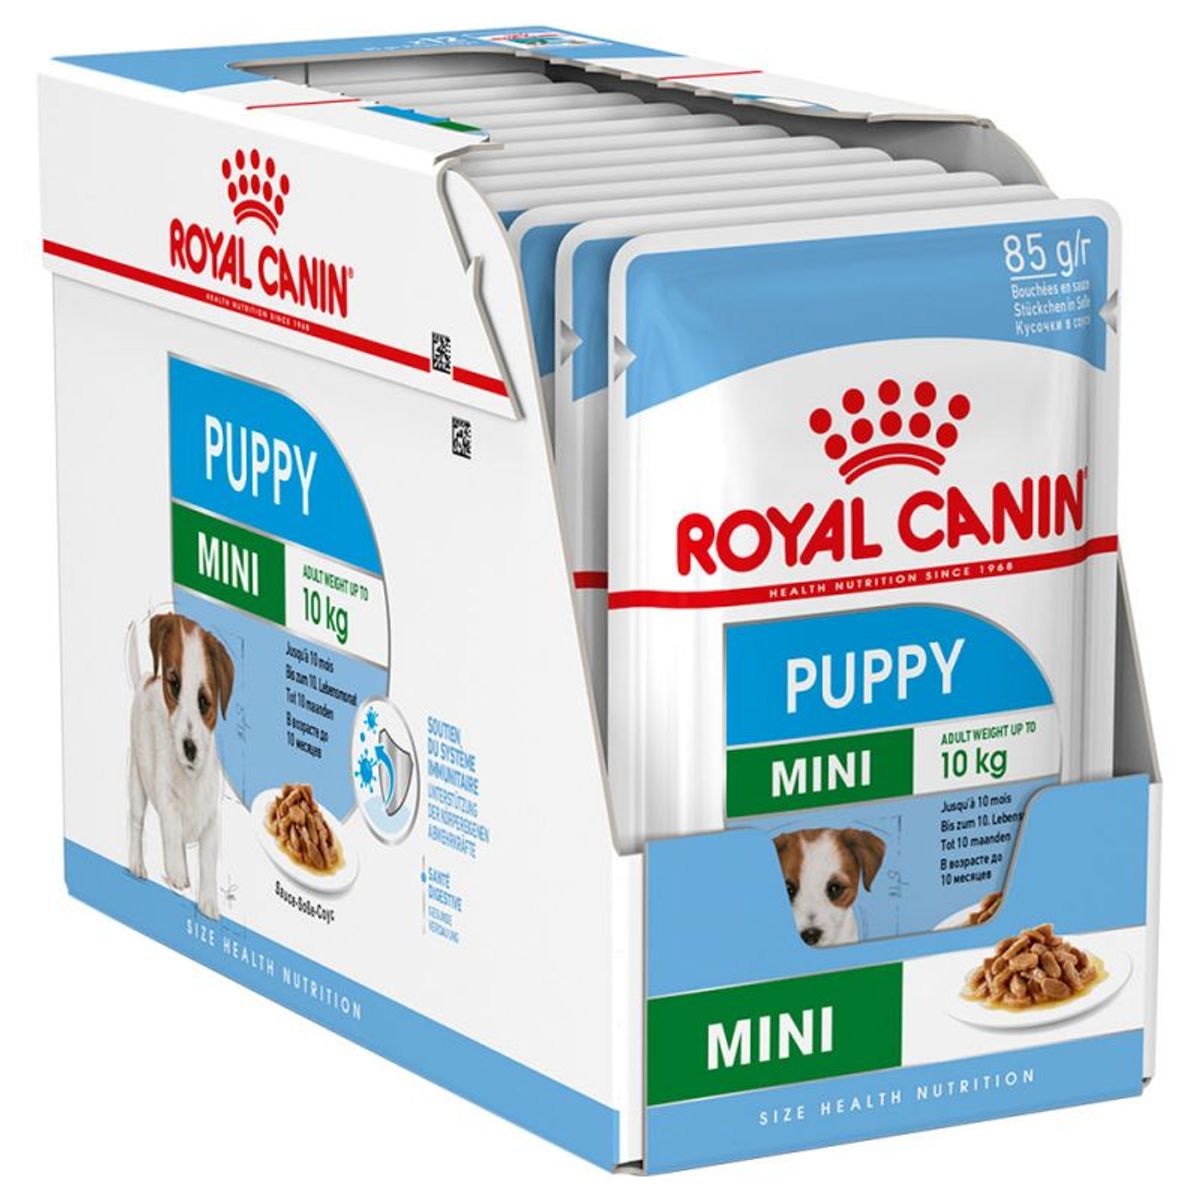 Puppy Mini "en sauce" 12 x 85 g - Royal Canin